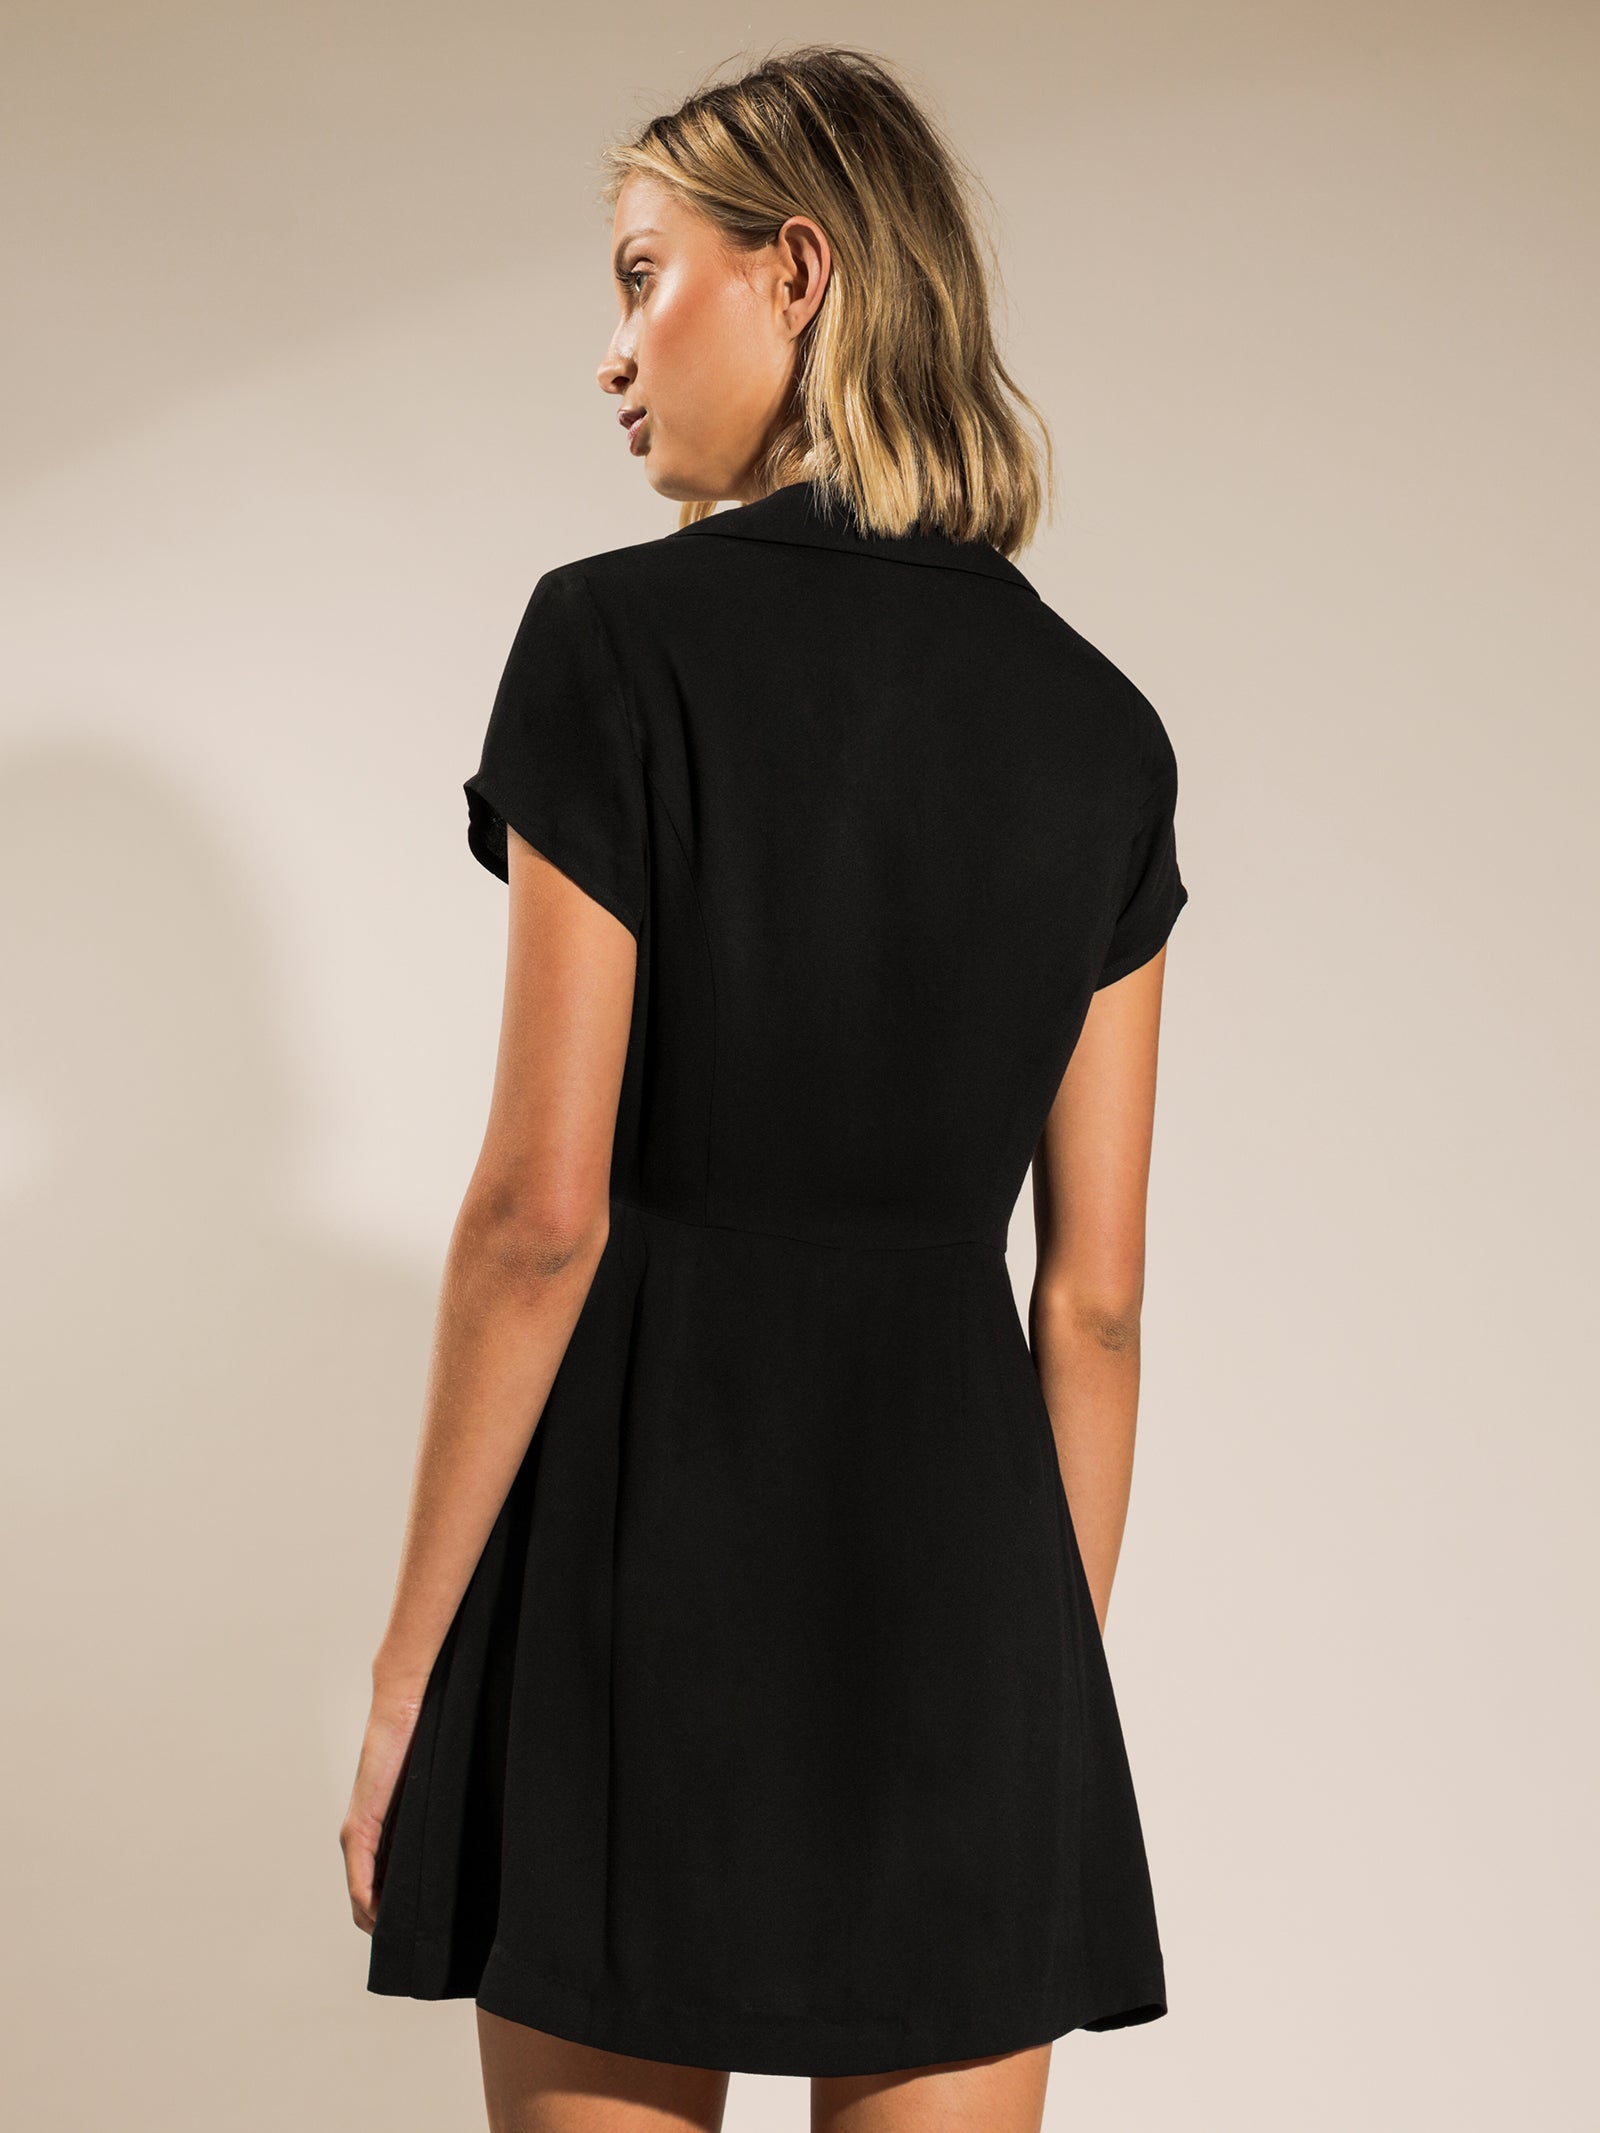 Amala Shirt Dress in Black